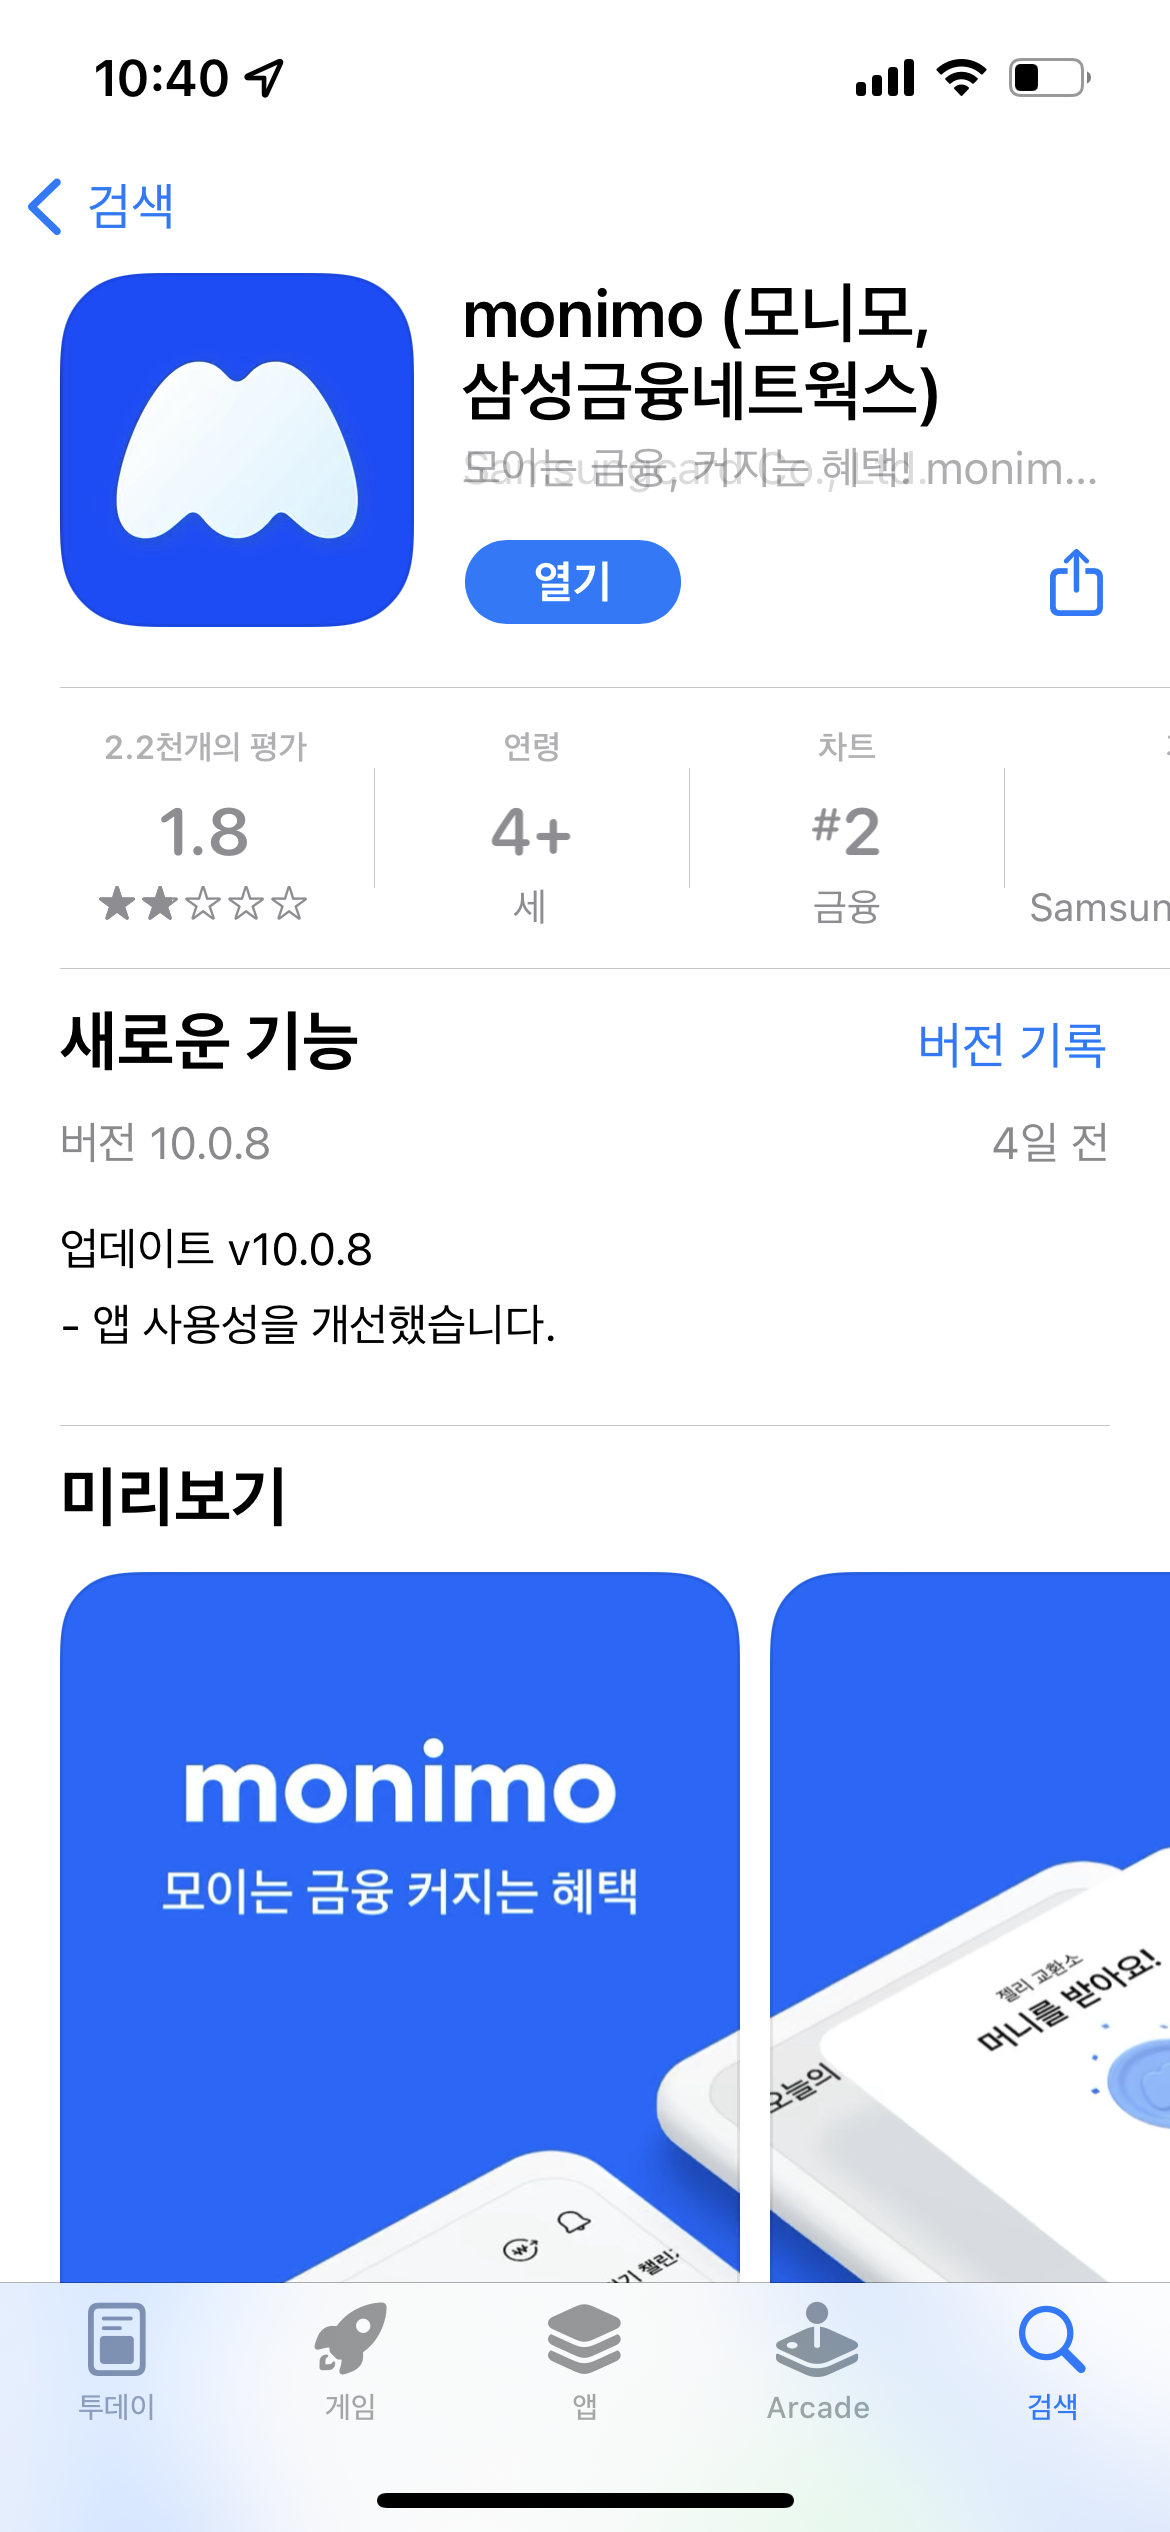 monimo 어플리케이션 앱스토어에서 캡처한 화면